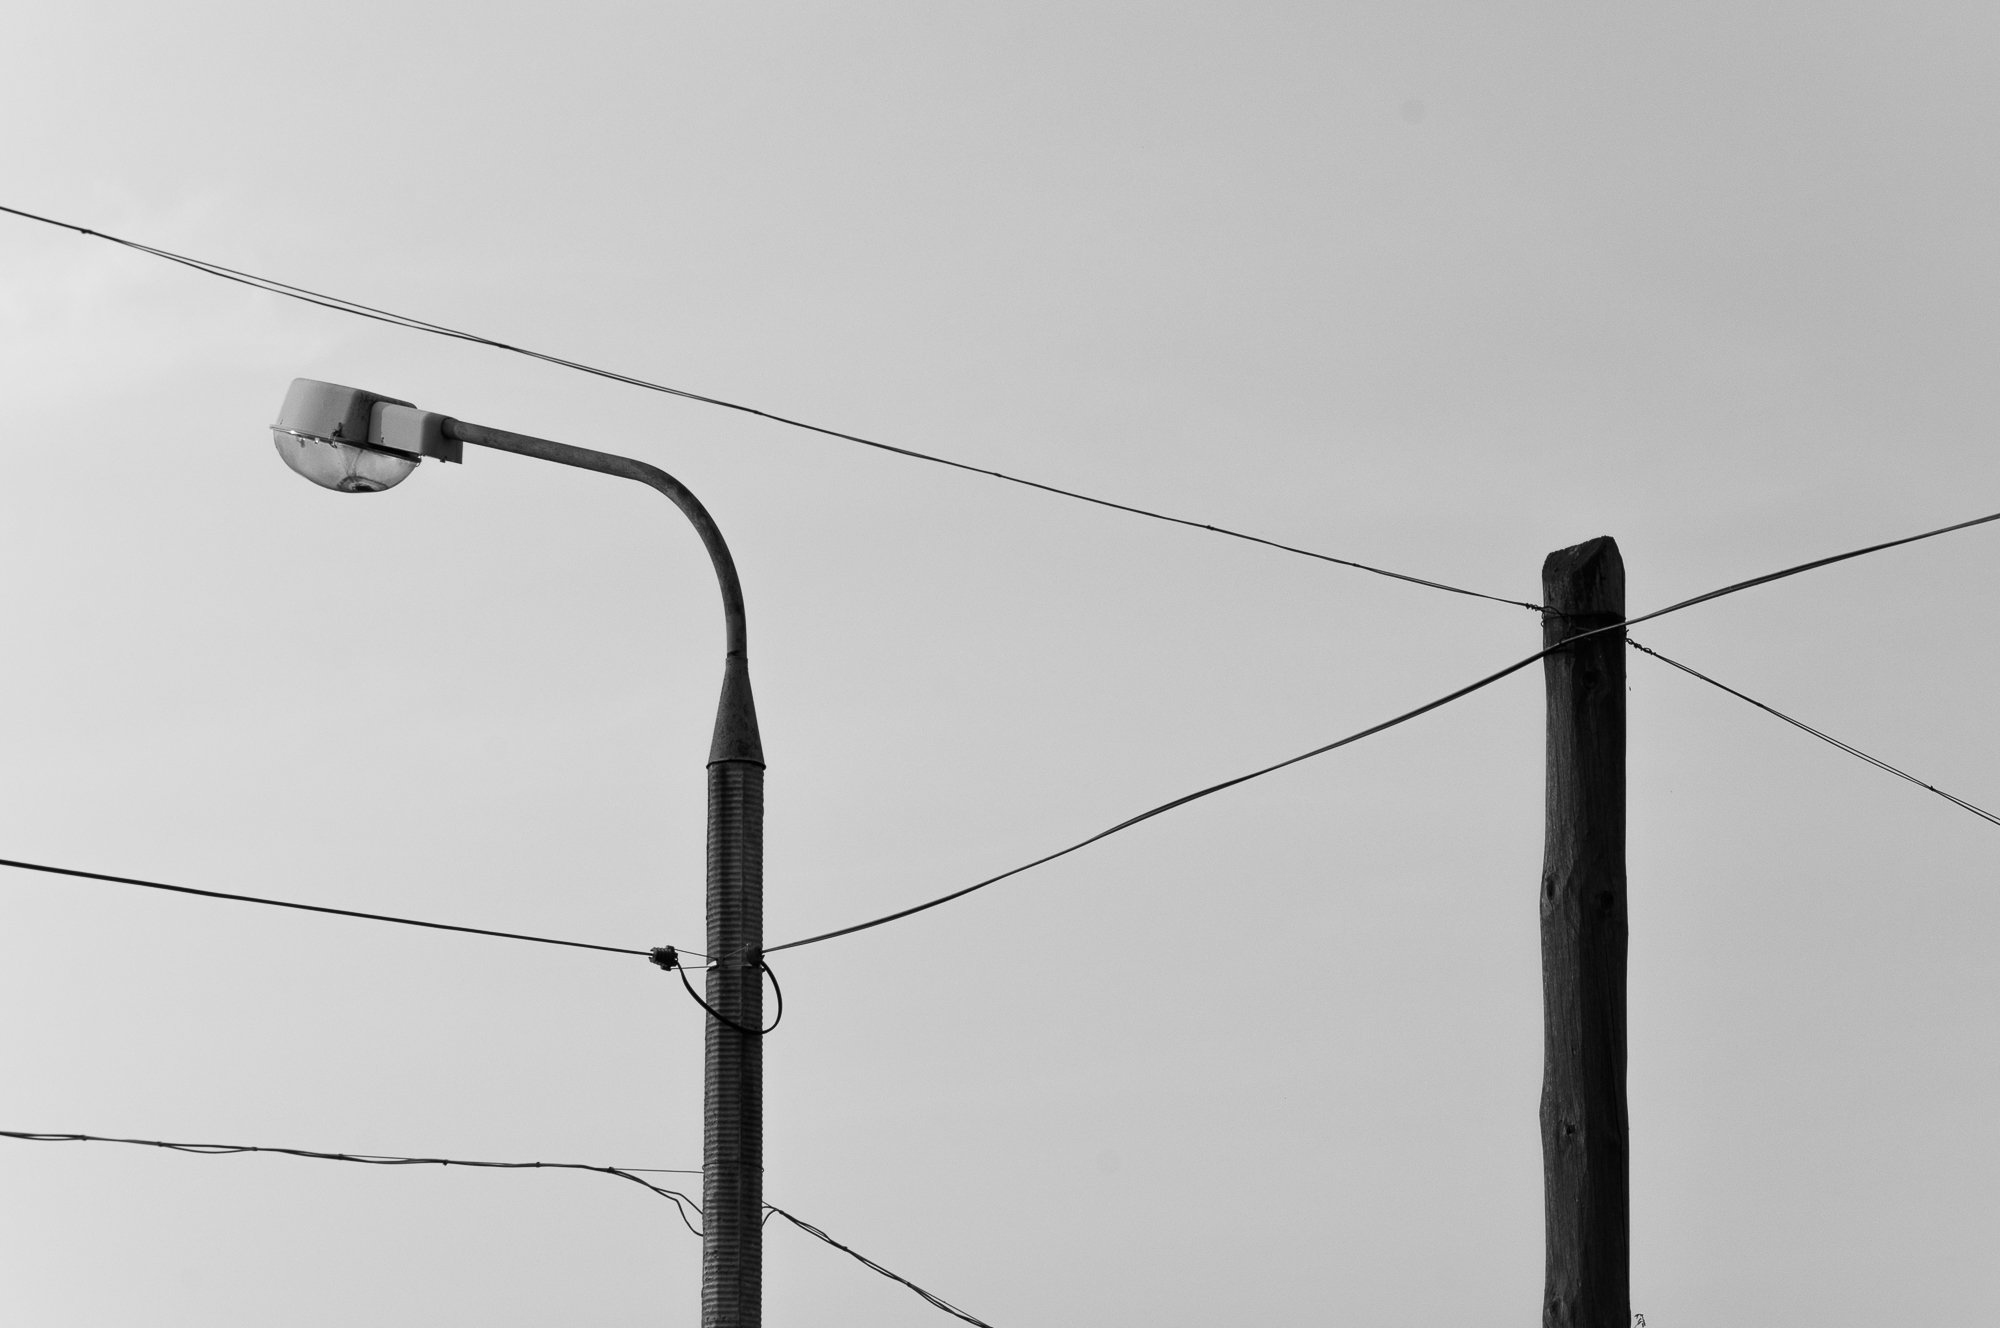 Adam Mazek Photography Warsaw (Warszawa) 2017. Post: "Time of prosperity and economic crisis." Minimalism. Street lamp.